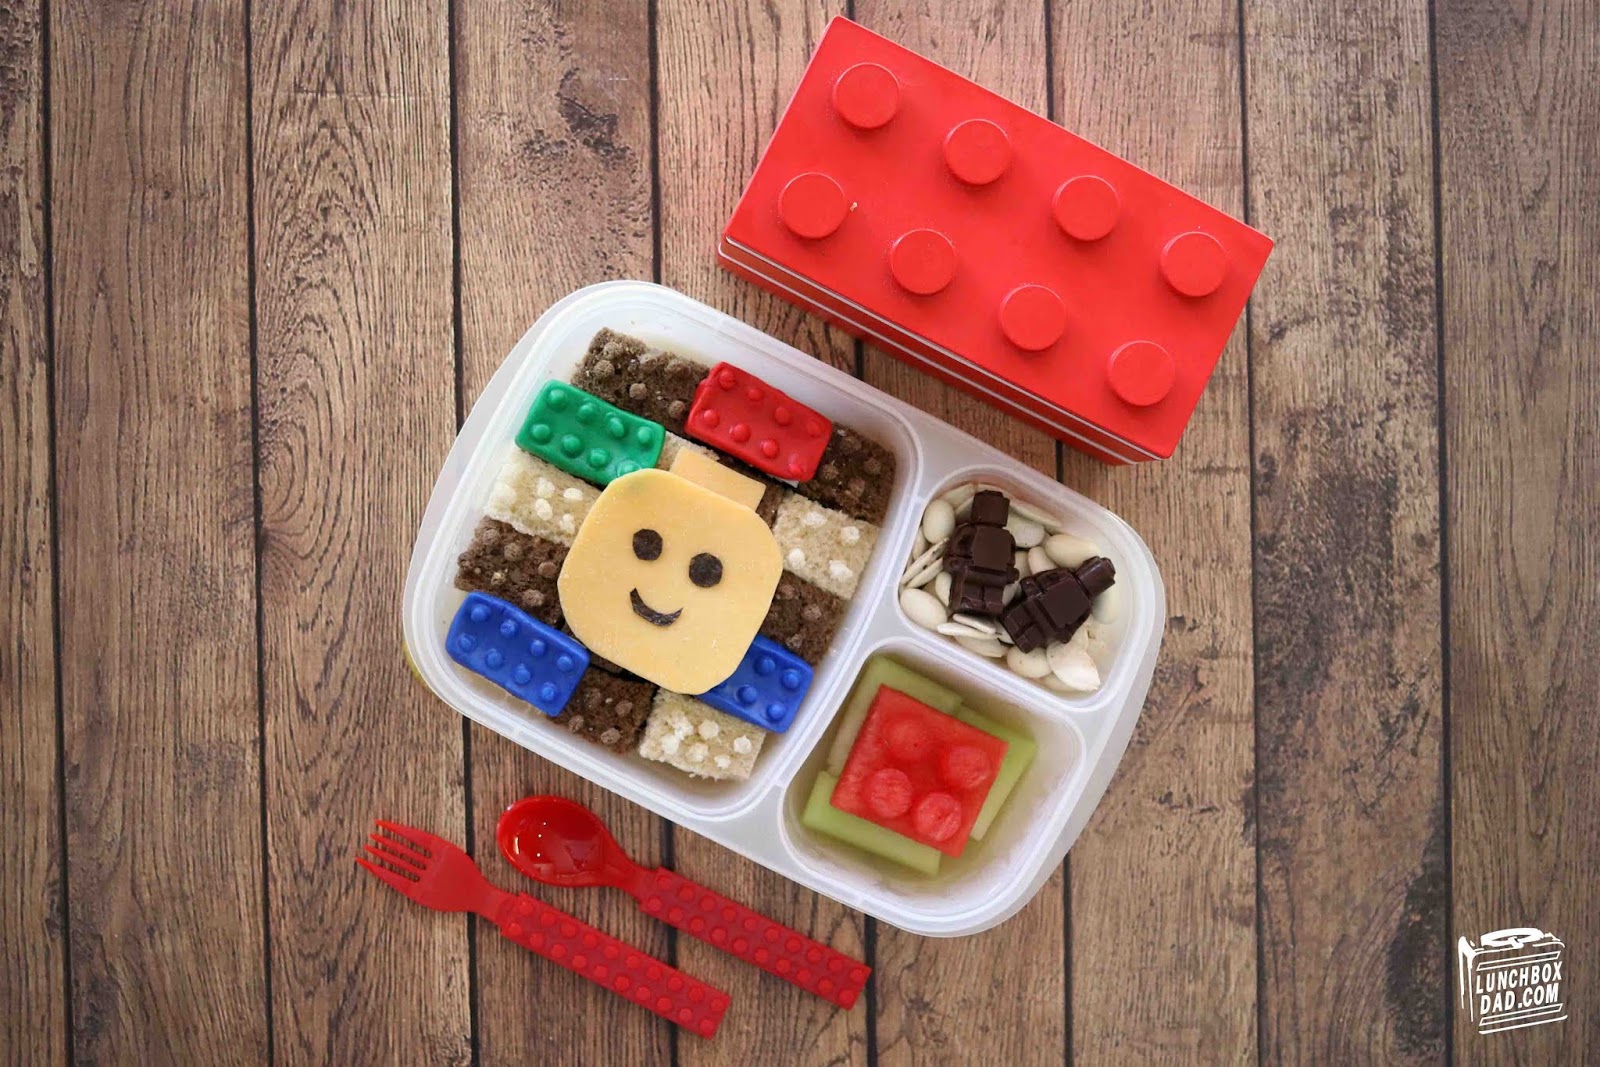 Lego Shape Lunch Box  Creative lunch box, Lunch box set, Lunch box